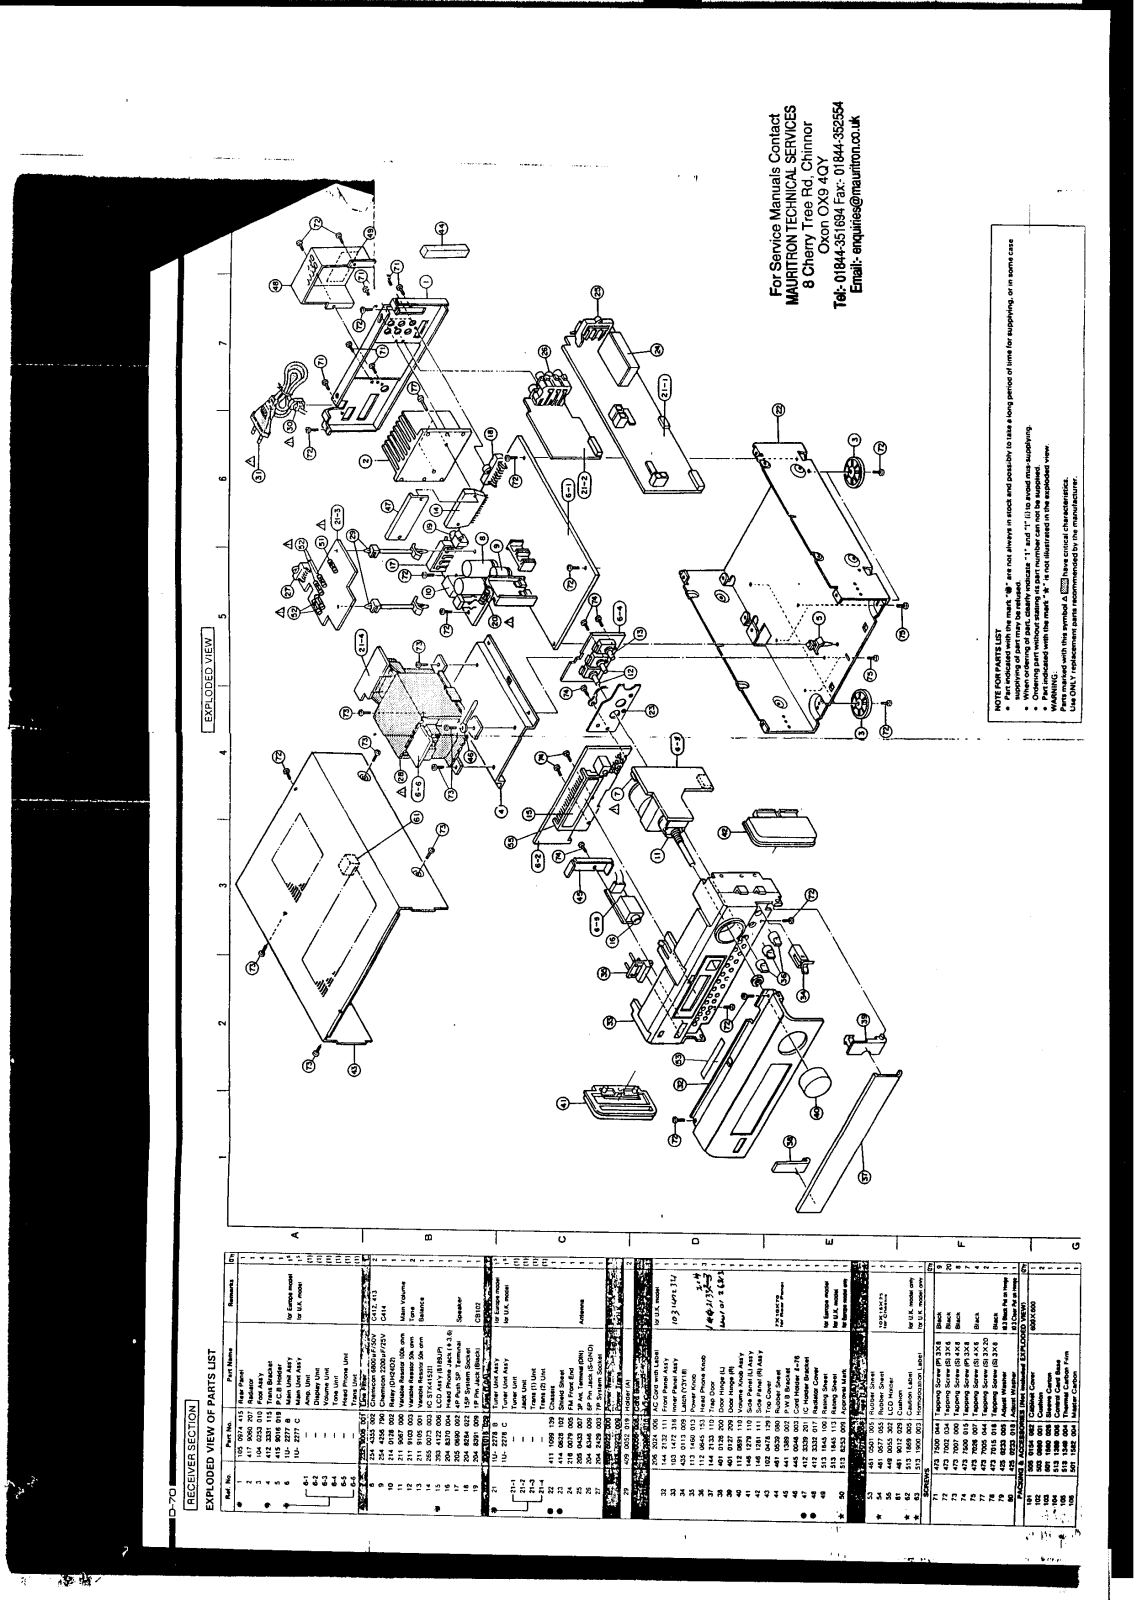 Denon UDRA-70, UDR-70, UCD-70 Schematic Diagram 4